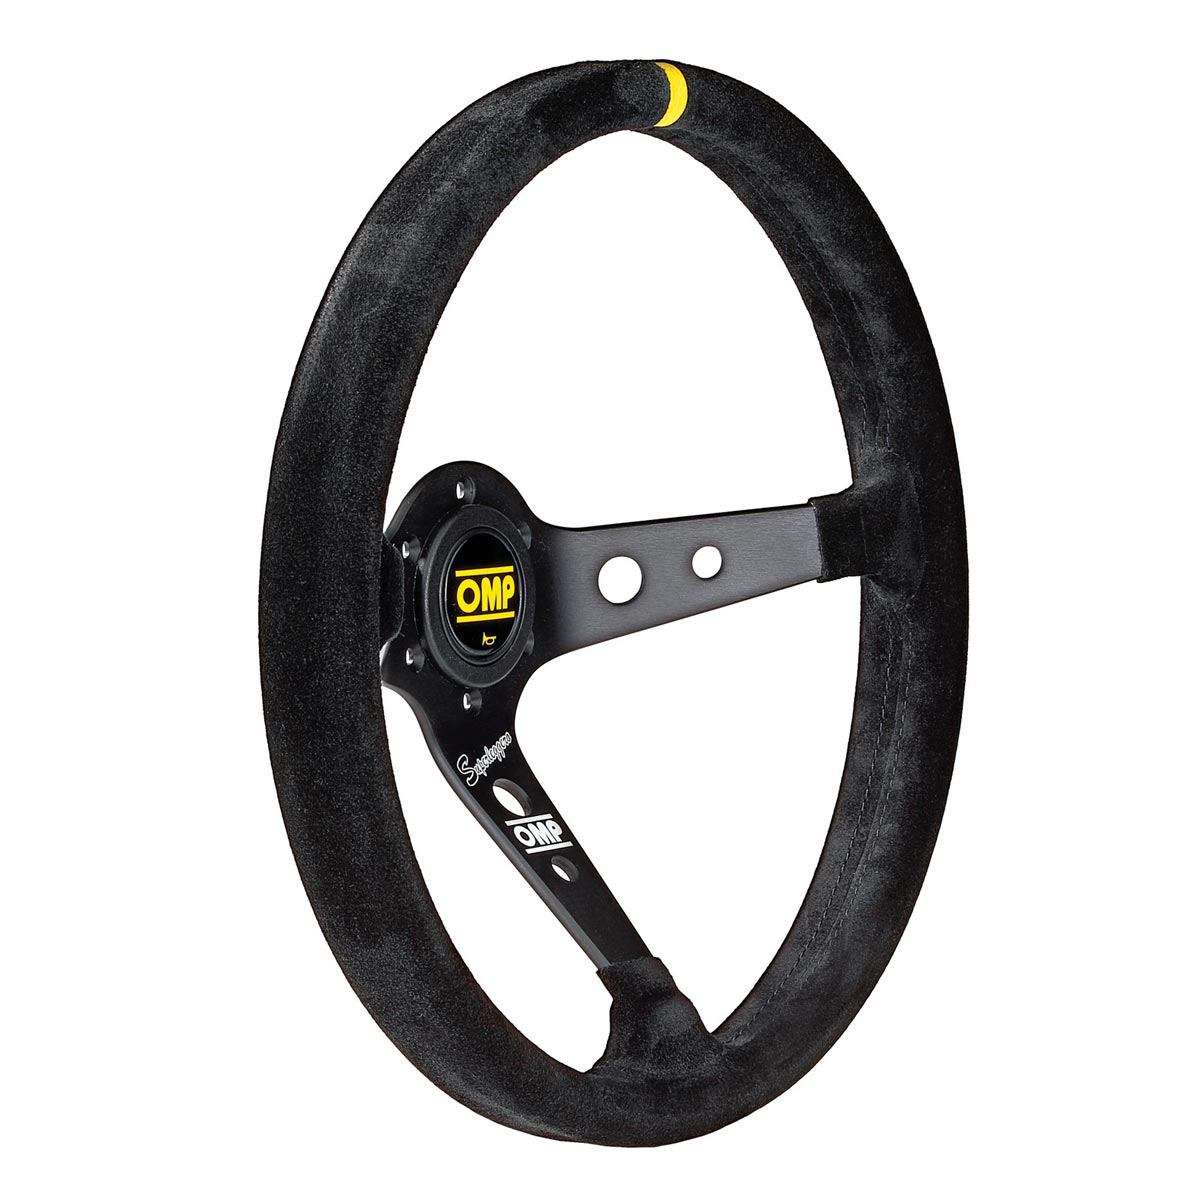 OMP Corsica OV Superleggero suede black (dished steering wheel) - PARTS33 GmbH